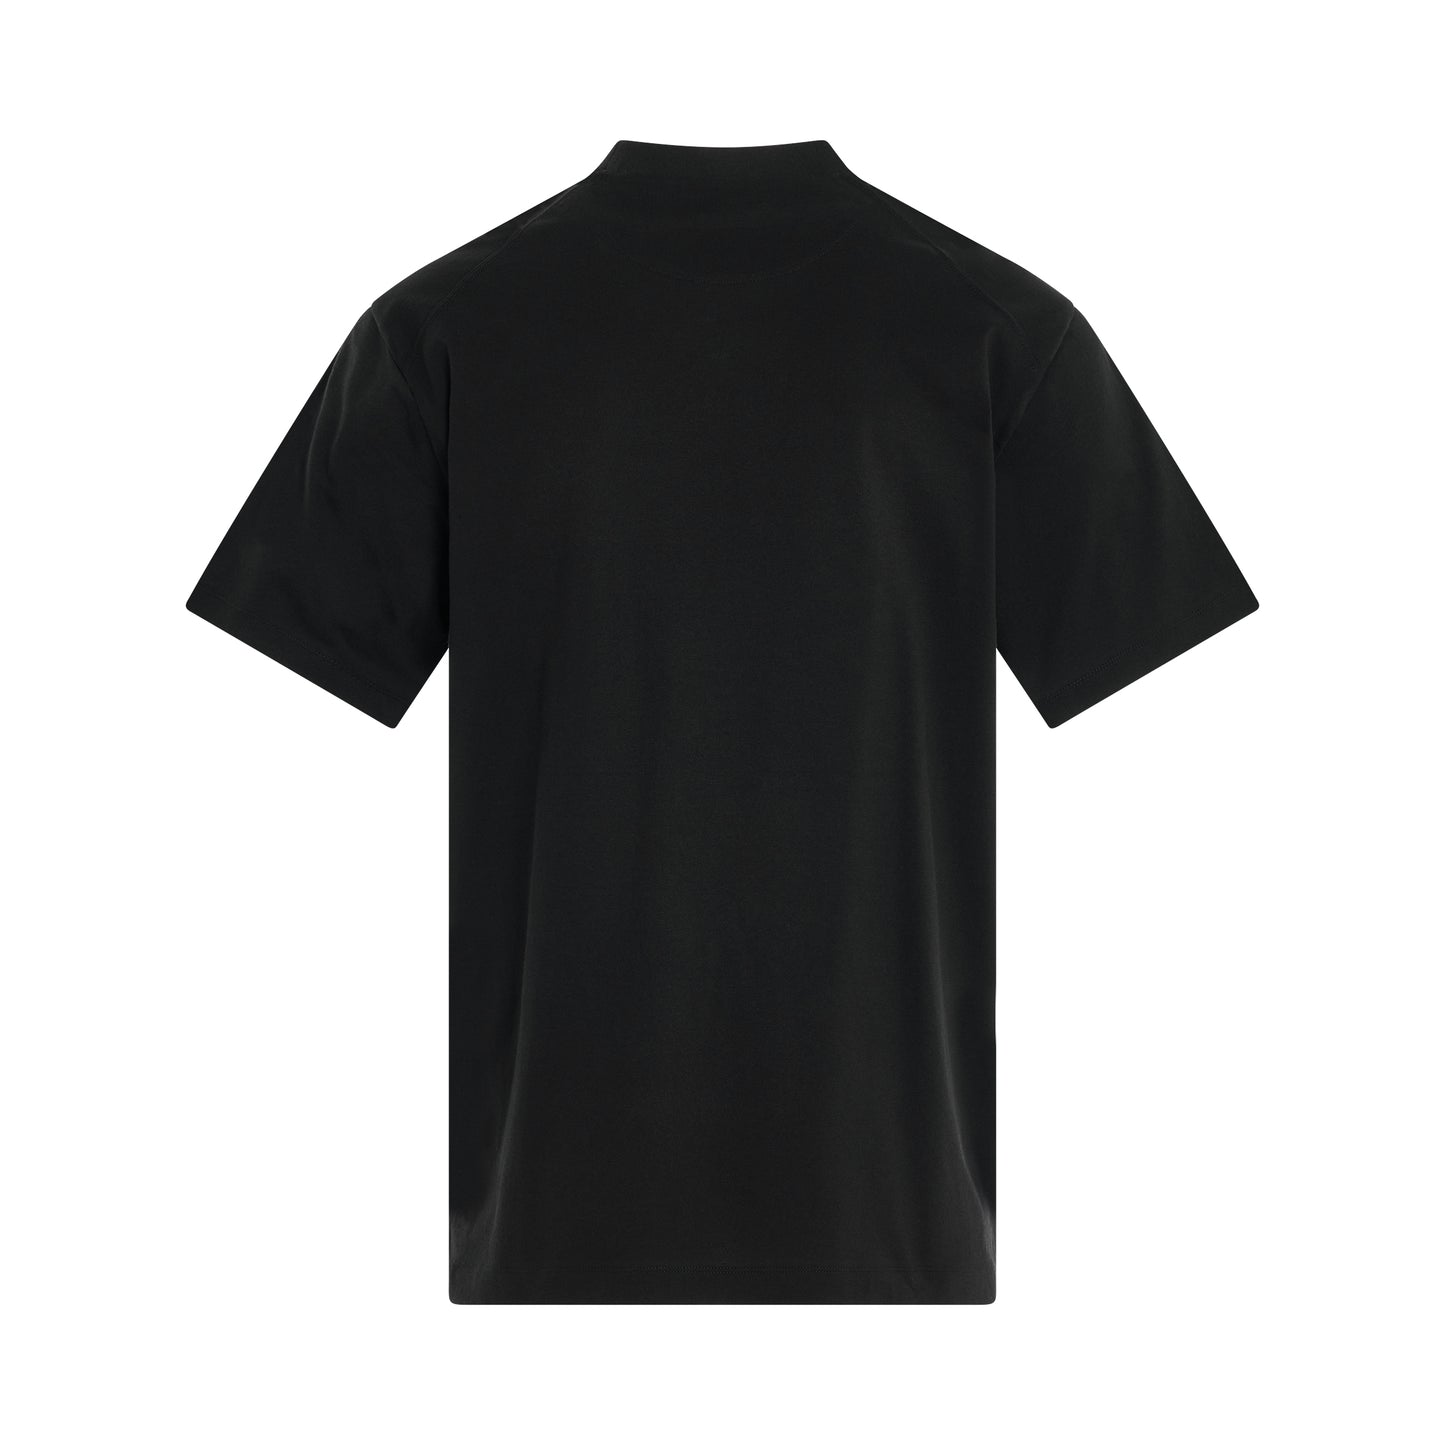 Blurry Logo T-Shirt in Black